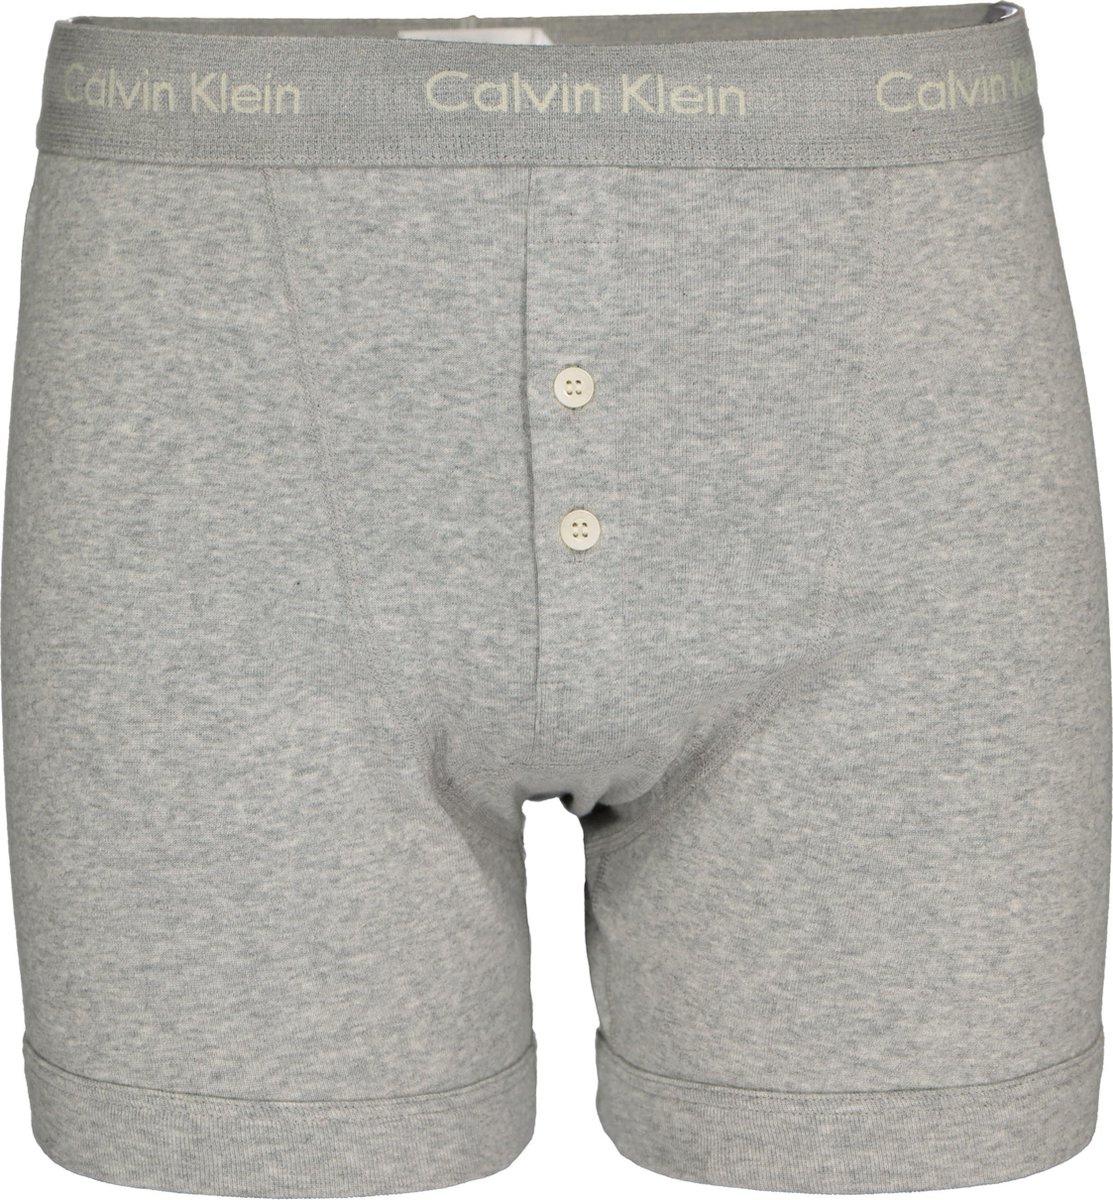 Calvin Klein Cotton boxer brief (1-pack) - heren boxer lang met knoop gulp  - grijs... | bol.com